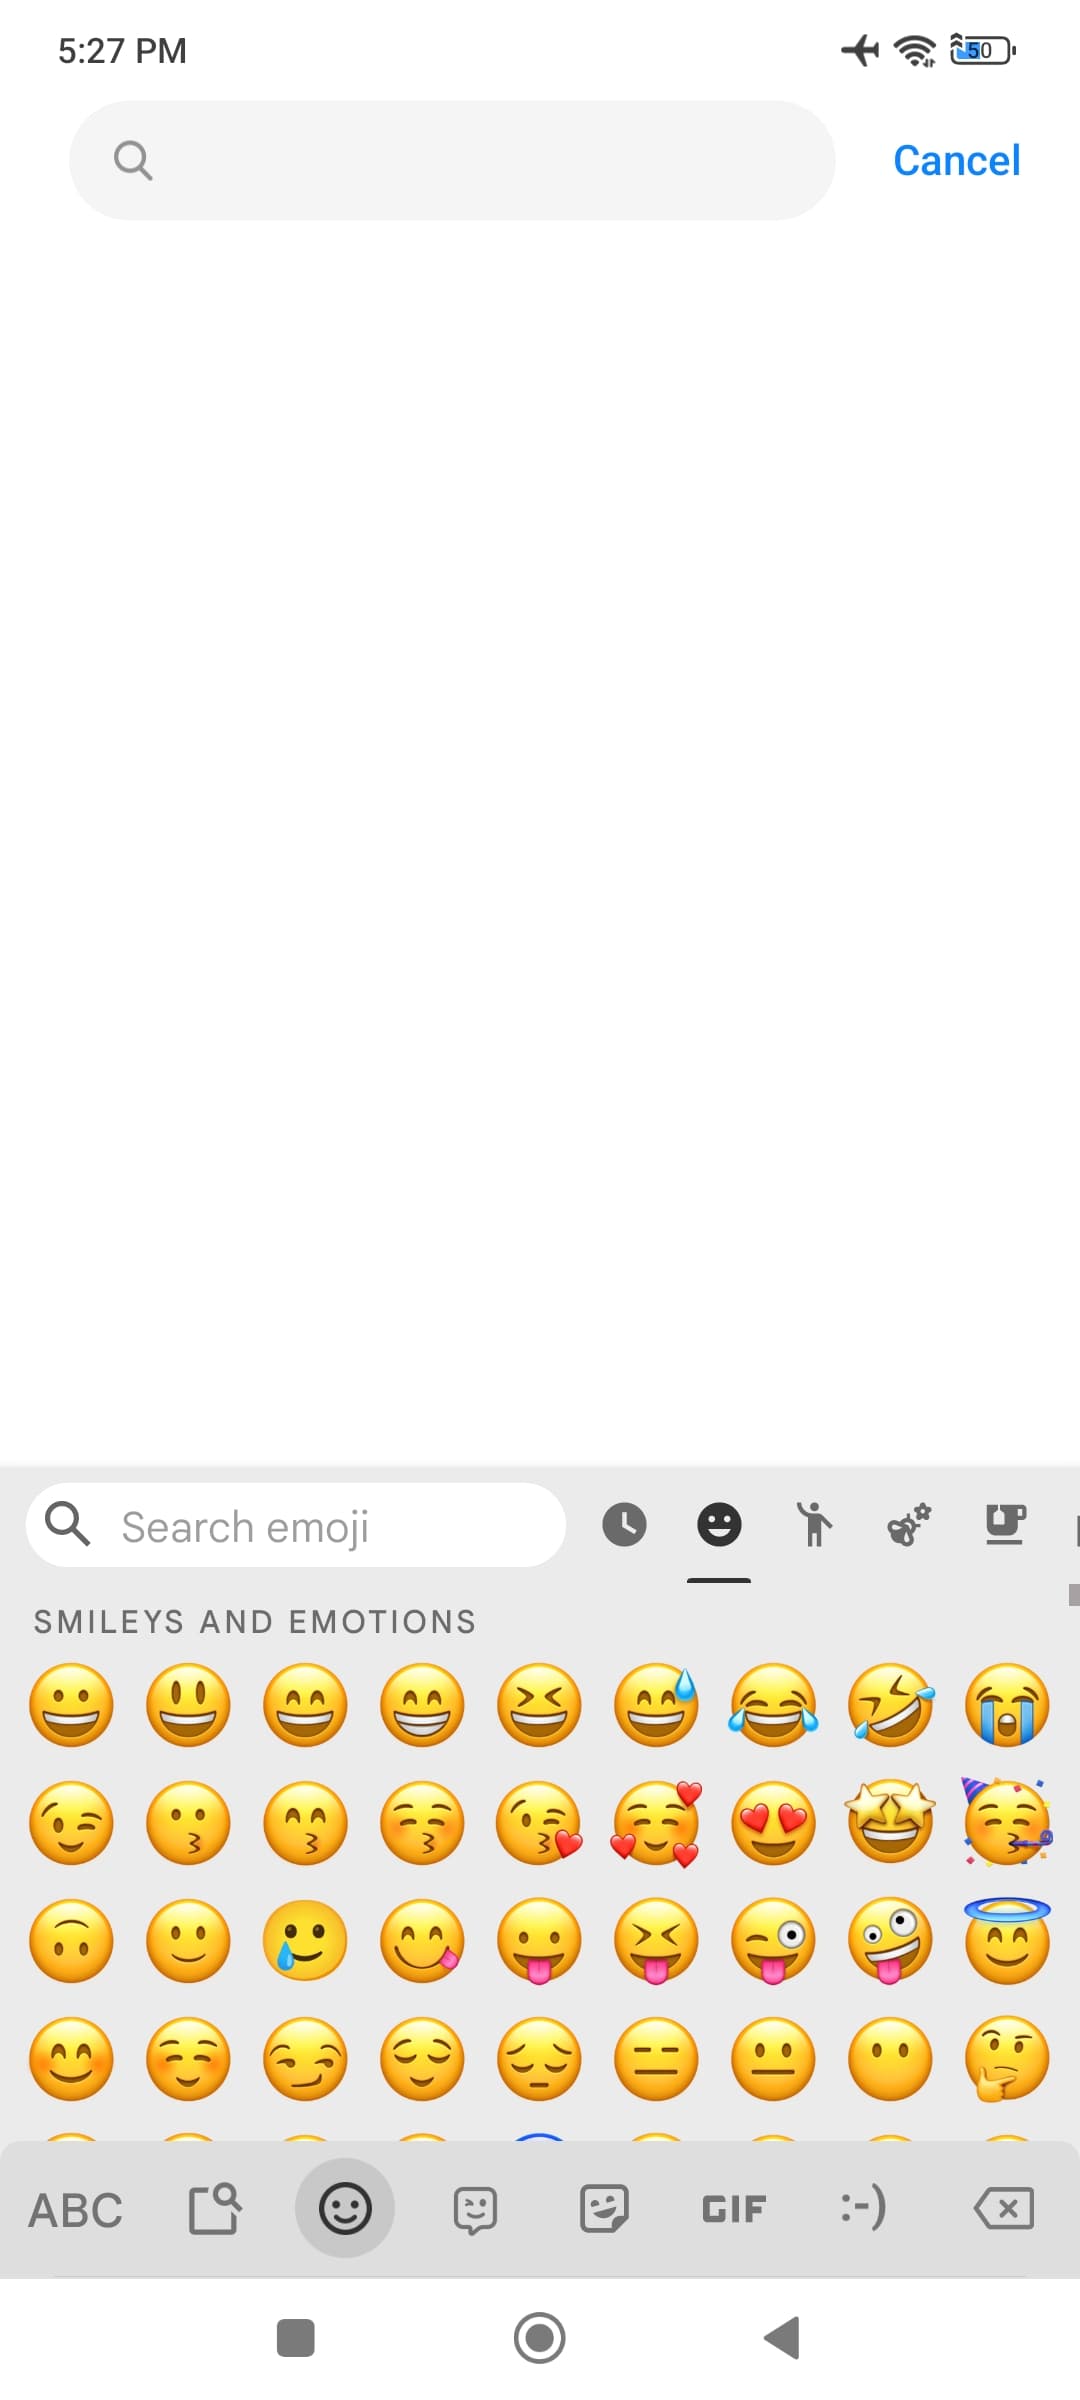 Install iPhone emoji on Xiaomi phone